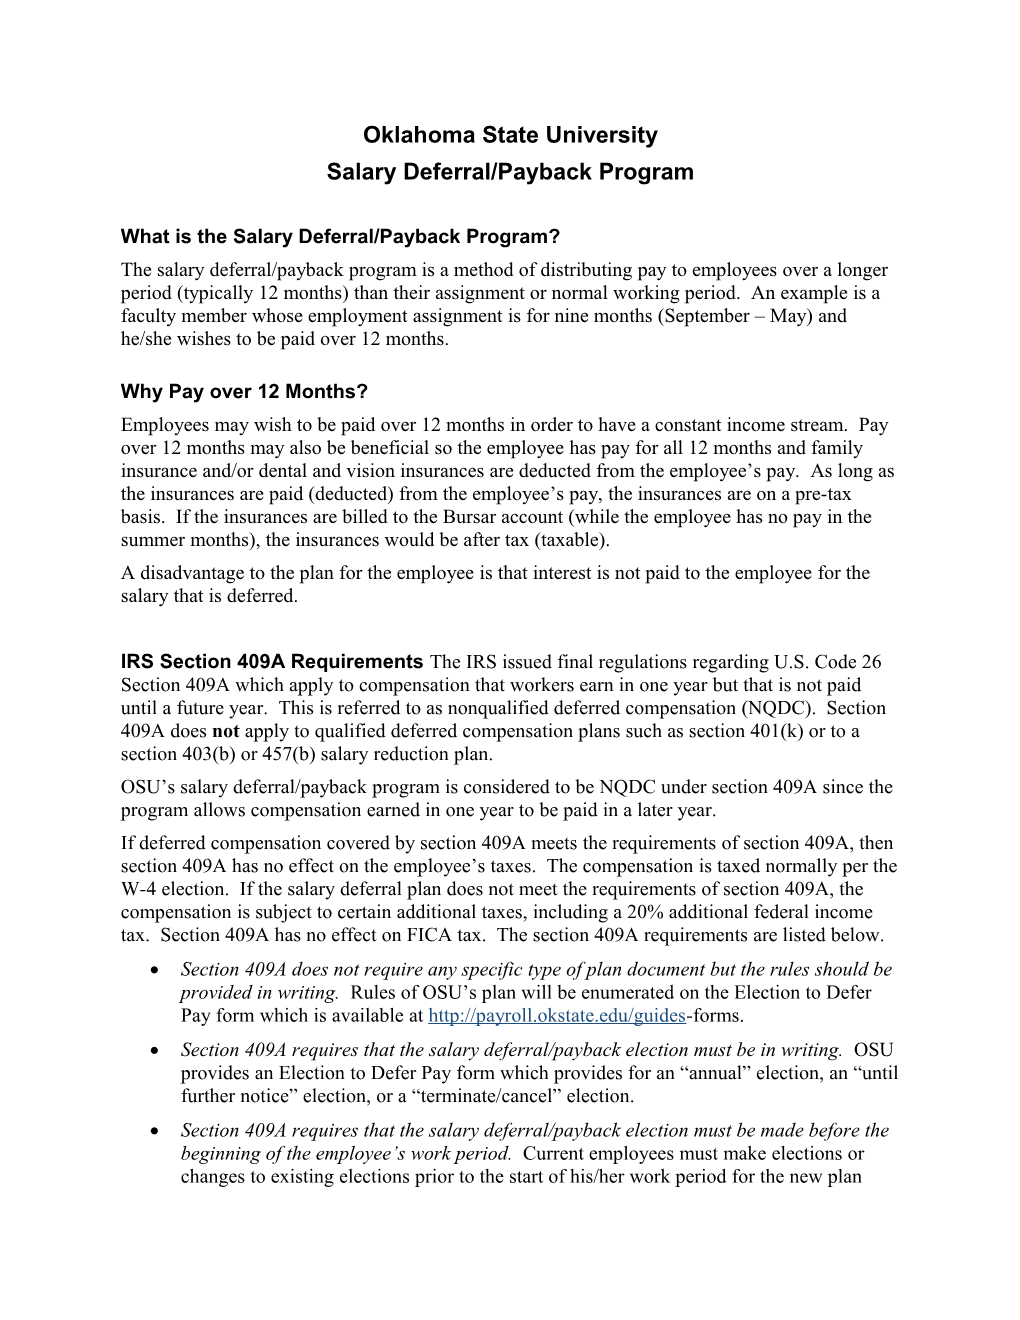 Salary Deferral/Payback Program